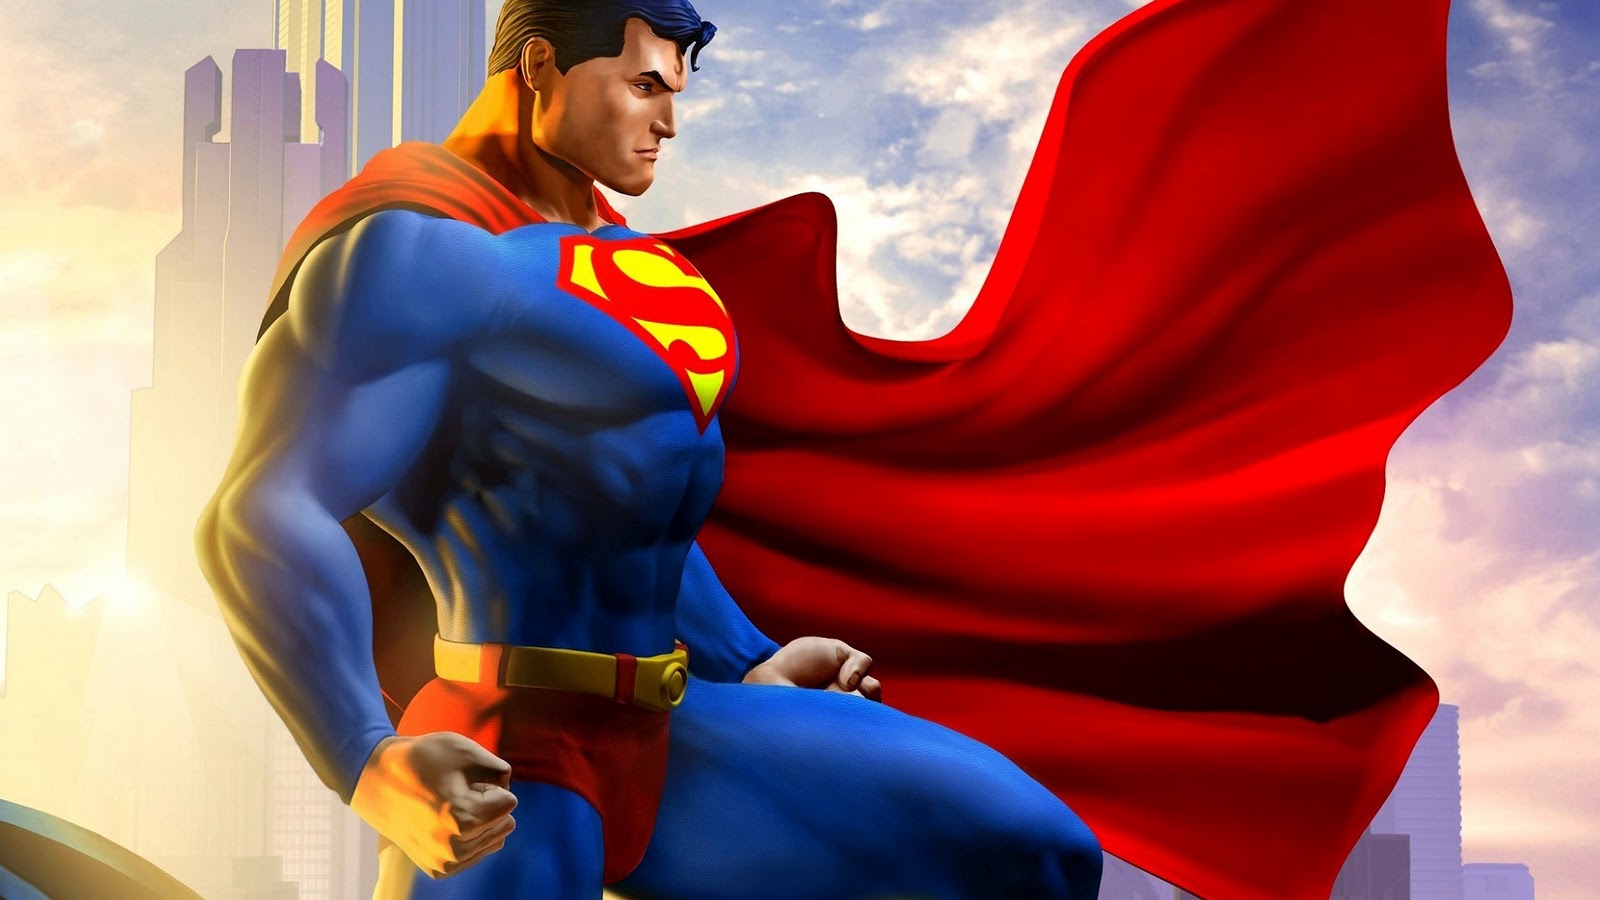 http://4.bp.blogspot.com/-DT4gQBJ0cnI/TZnGCHni4mI/AAAAAAAAGj0/EAgm3jn4Fcw/s1600/Superman-achtergronden-hd-superman-wallpapers-afbeelding-1.jpg